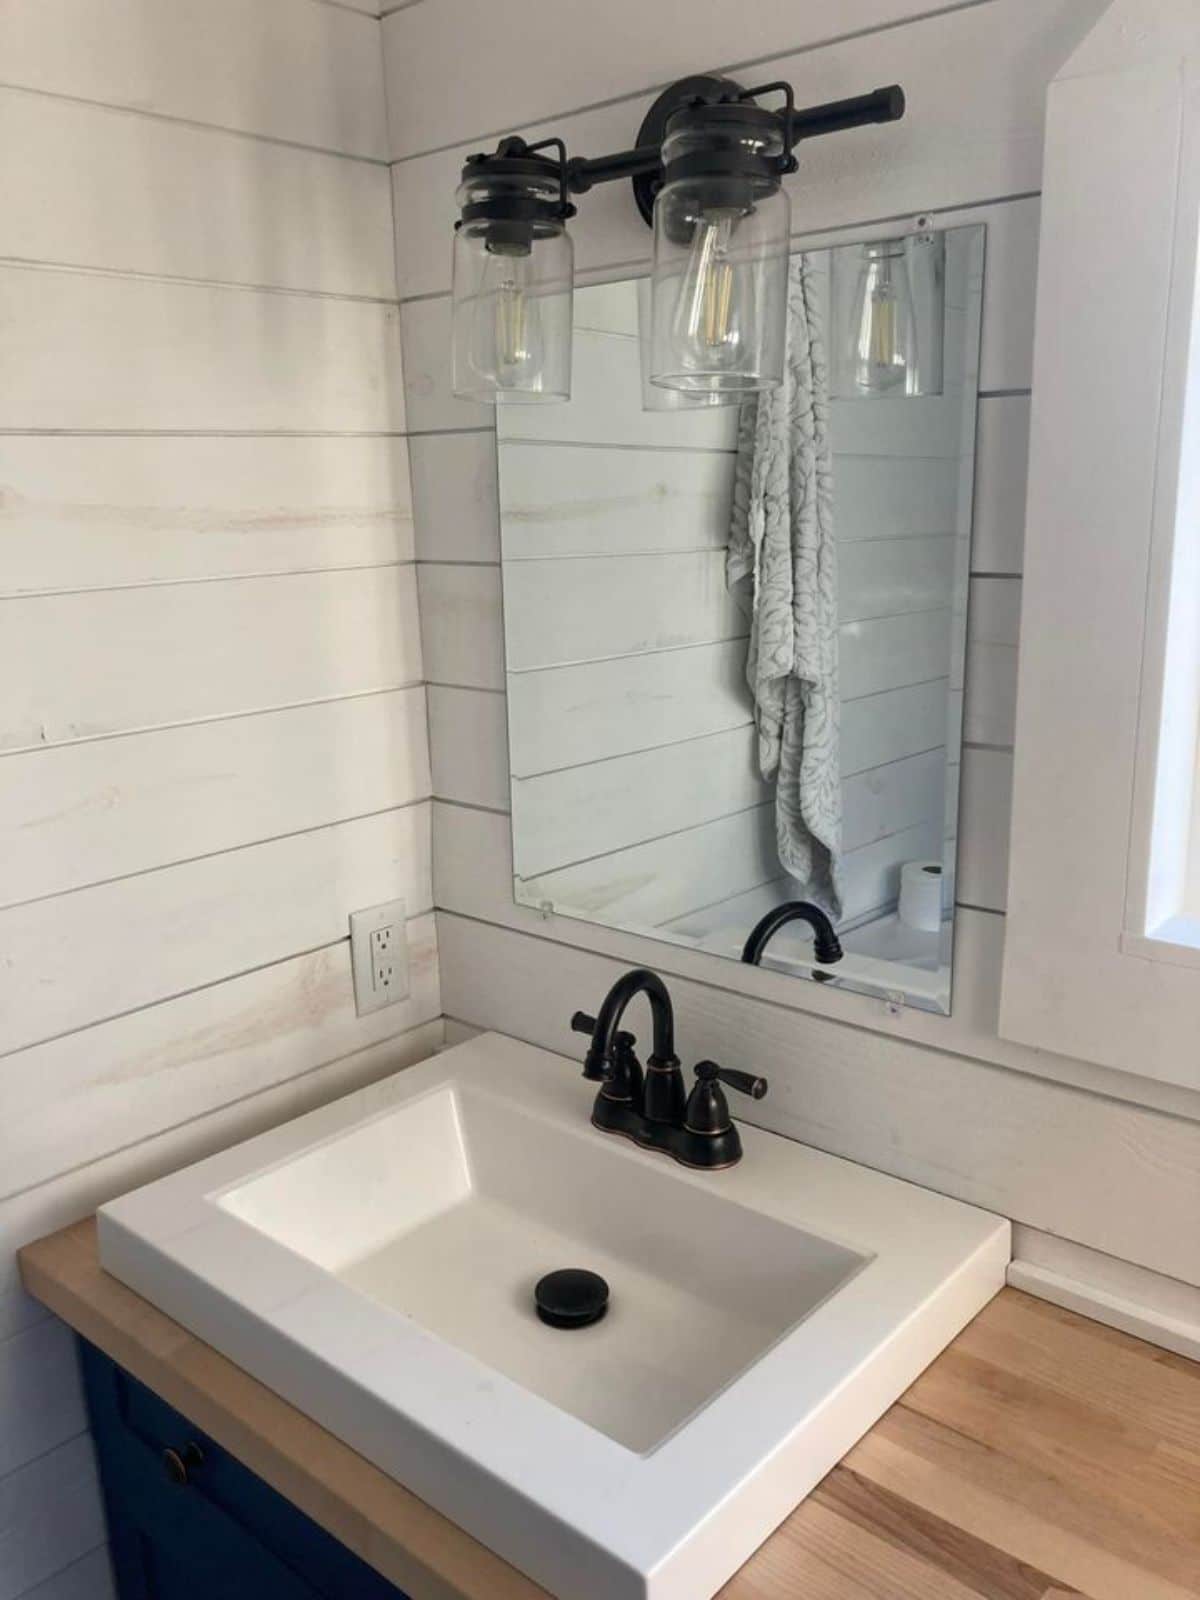 white square sink below mirror on shiplap walls in bathroom